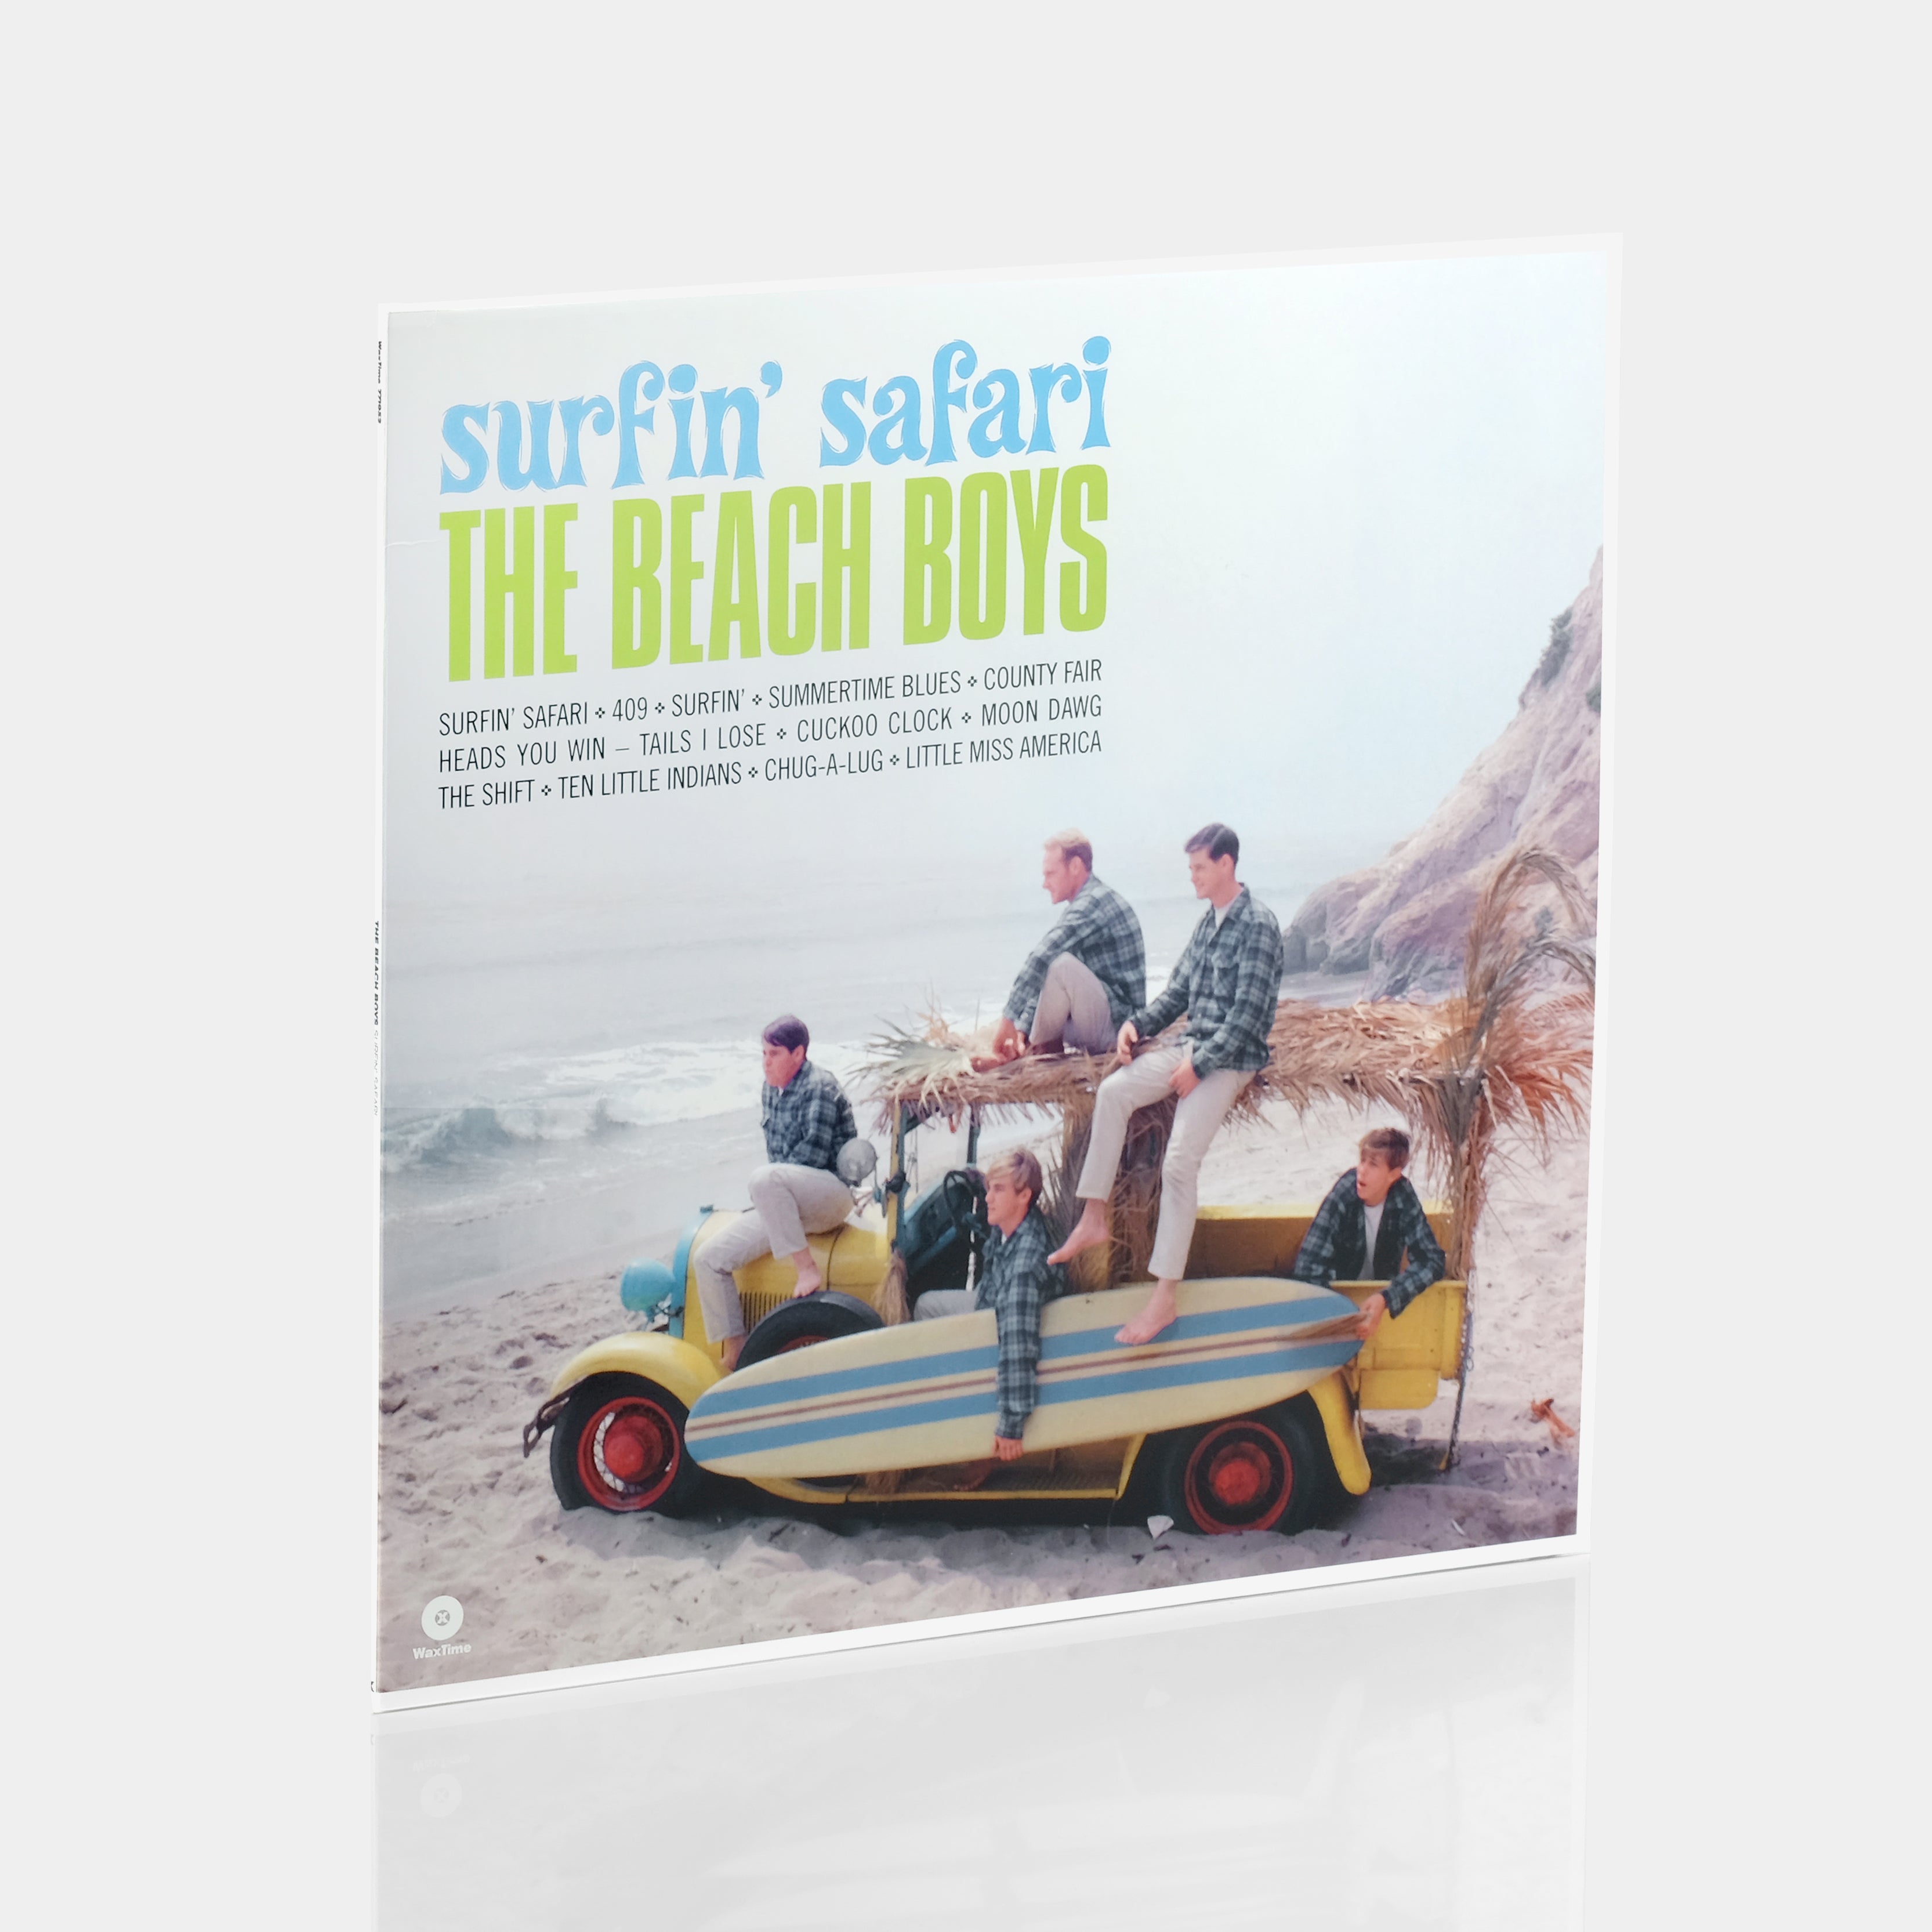 The Beach Boys - Surfin' Safari LP Vinyl Record